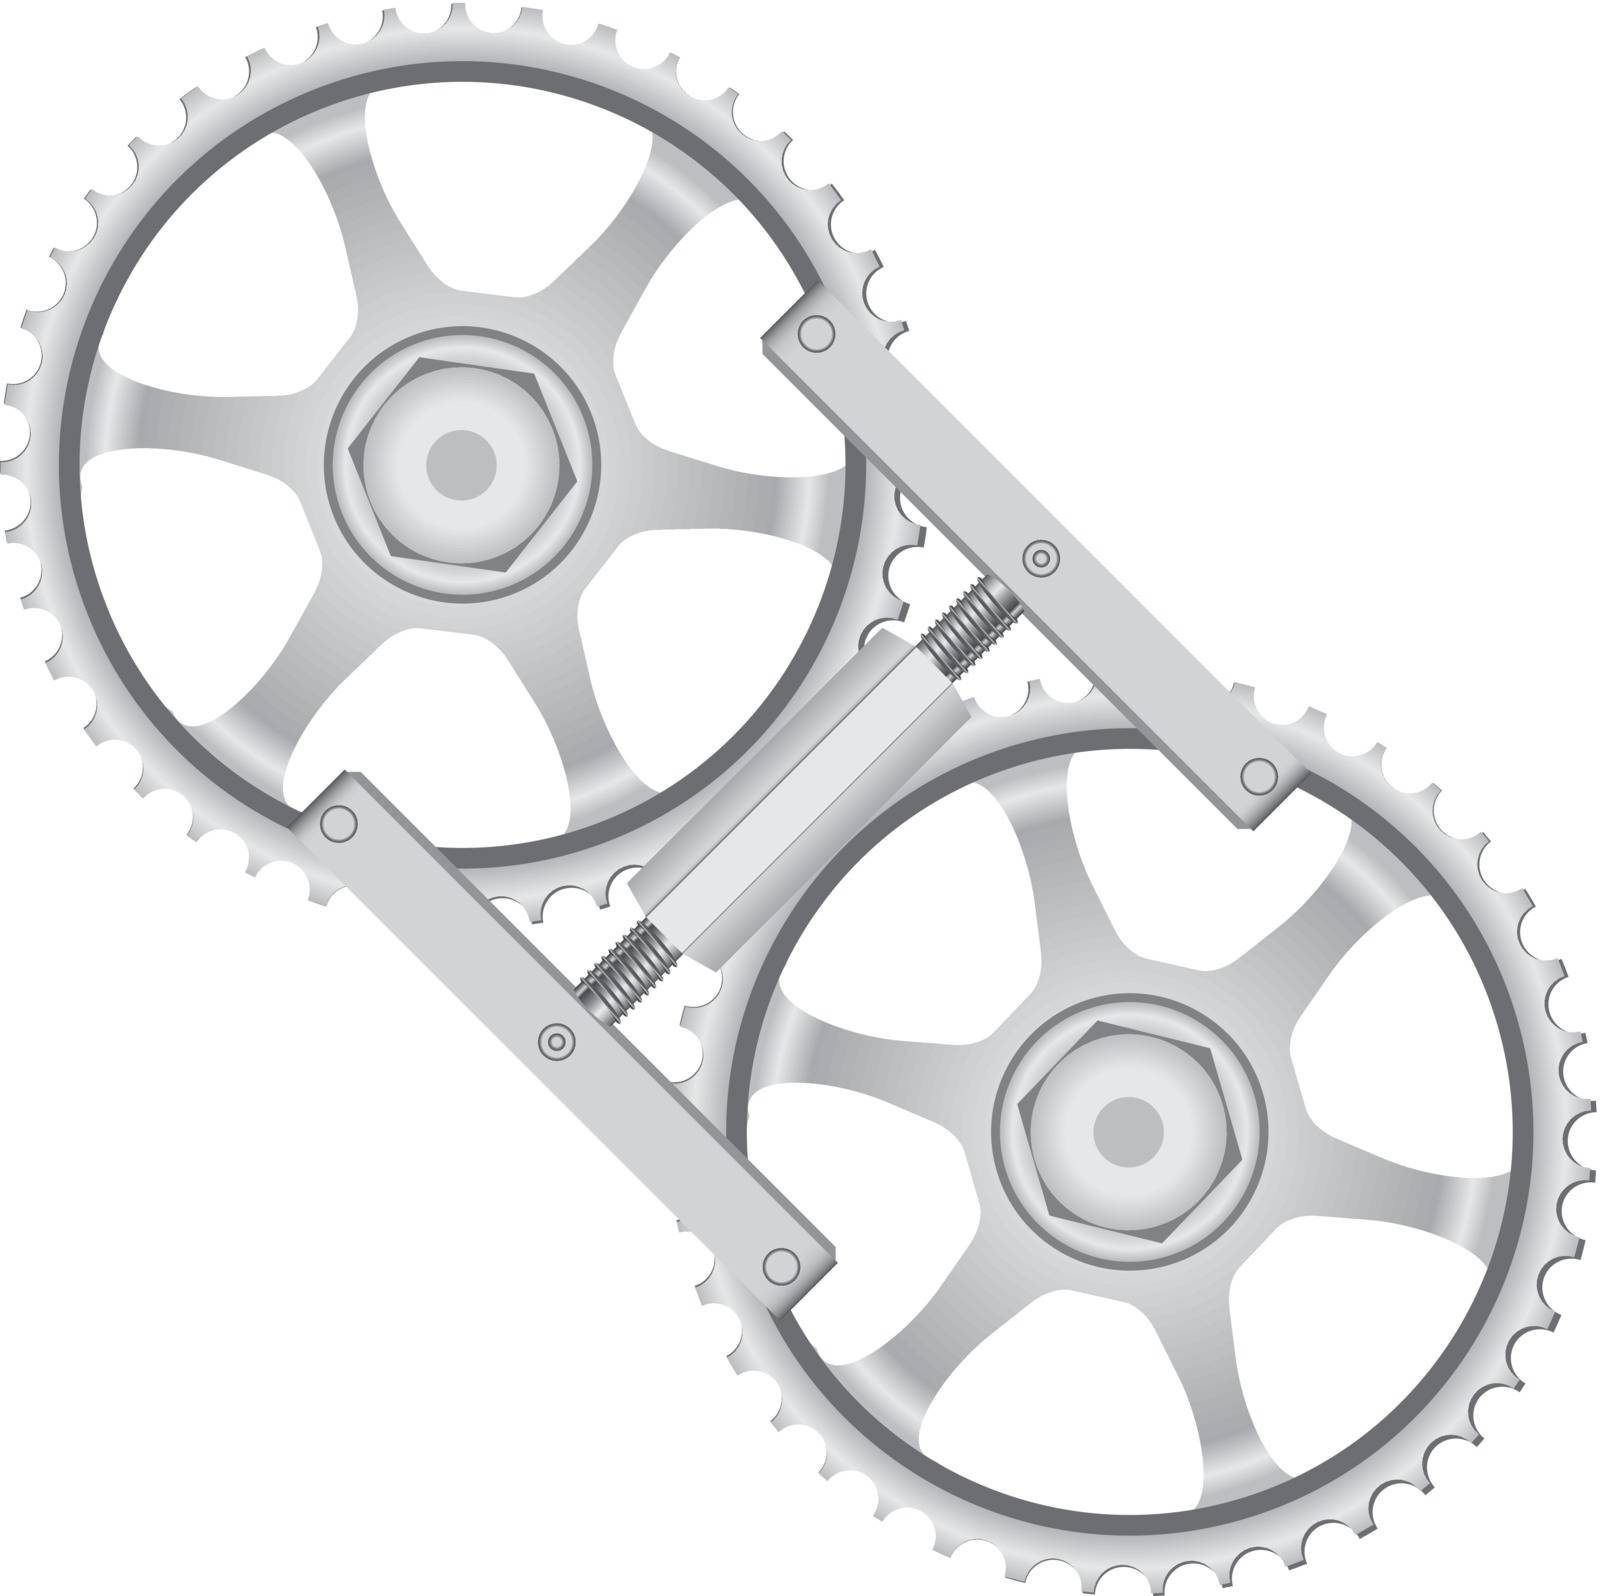 Tool lock gears for industrial work. Vector illustration.